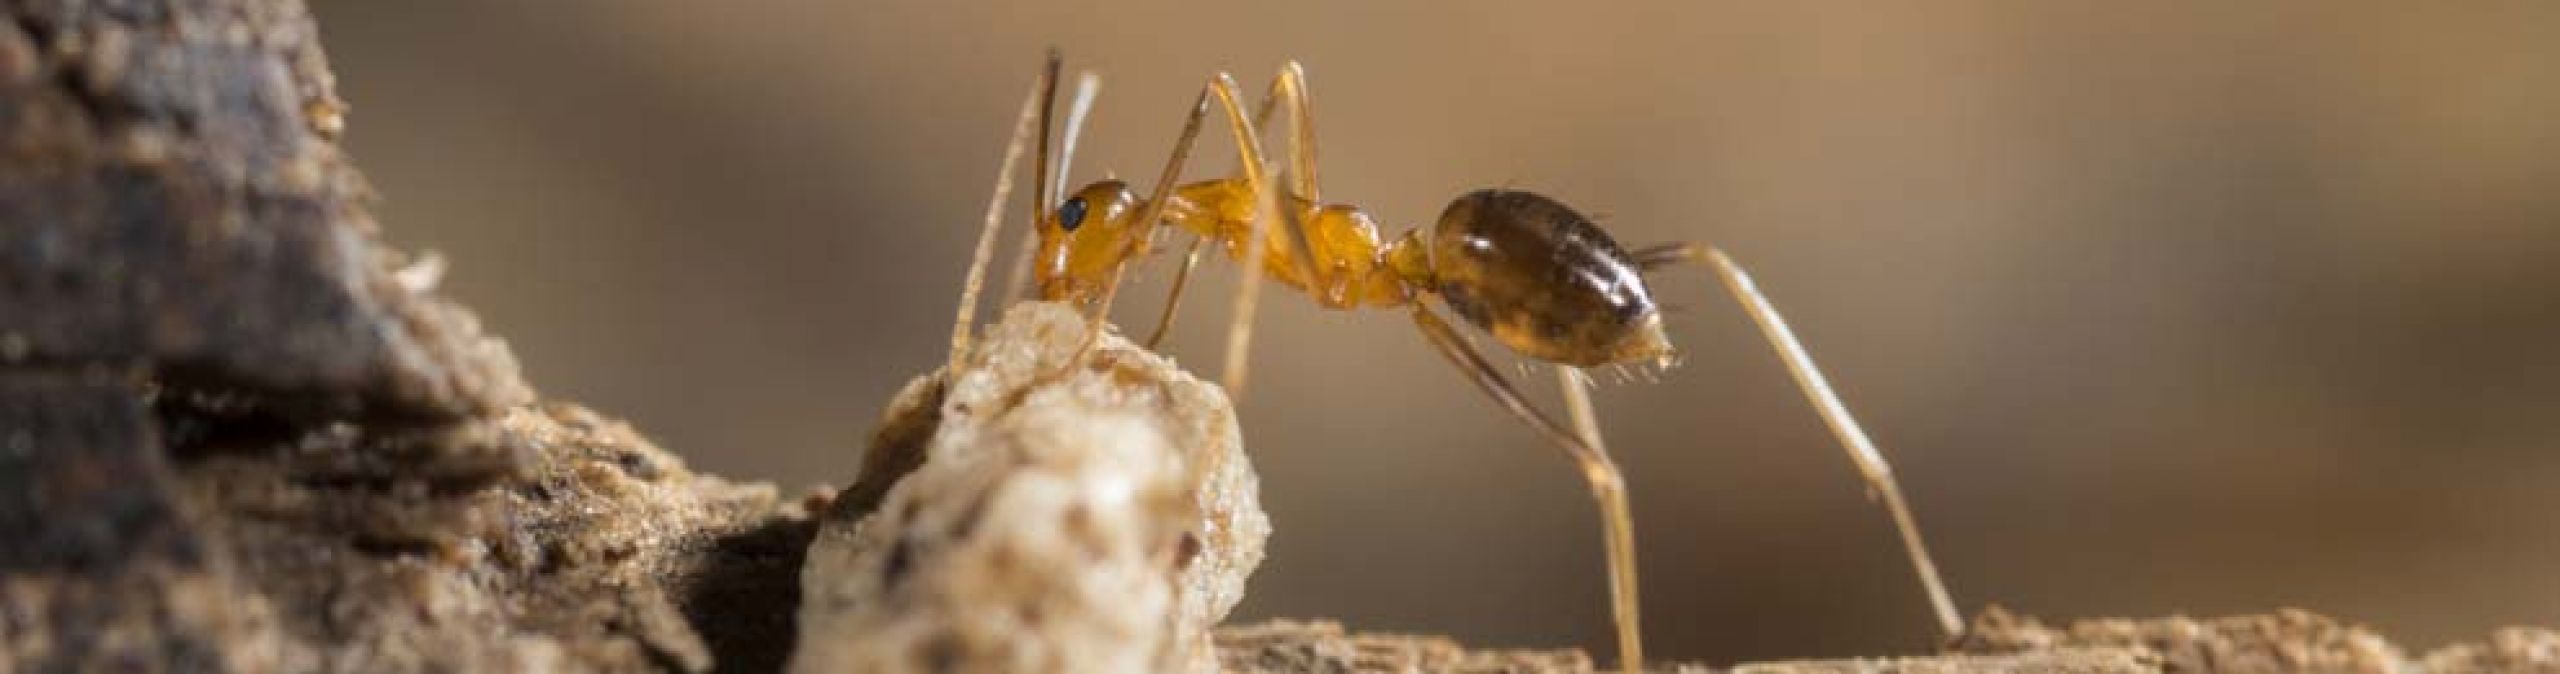 Yellow crazy ants
Photographer: Jurgen Freund